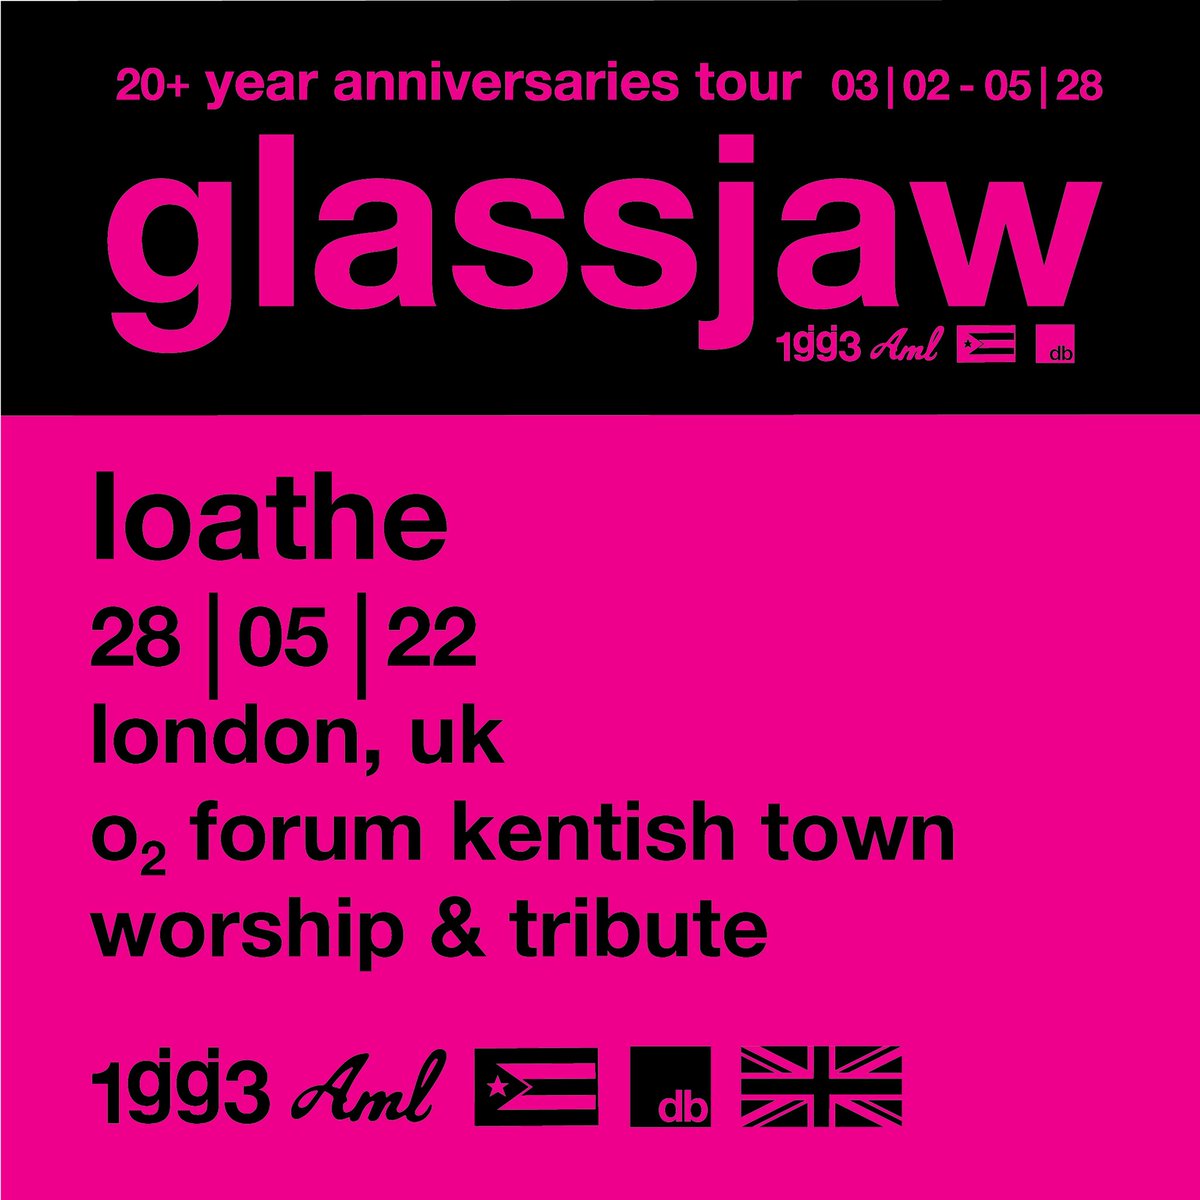 london. see you soon with @loatheasone. feel free to participate. glassjaw.com